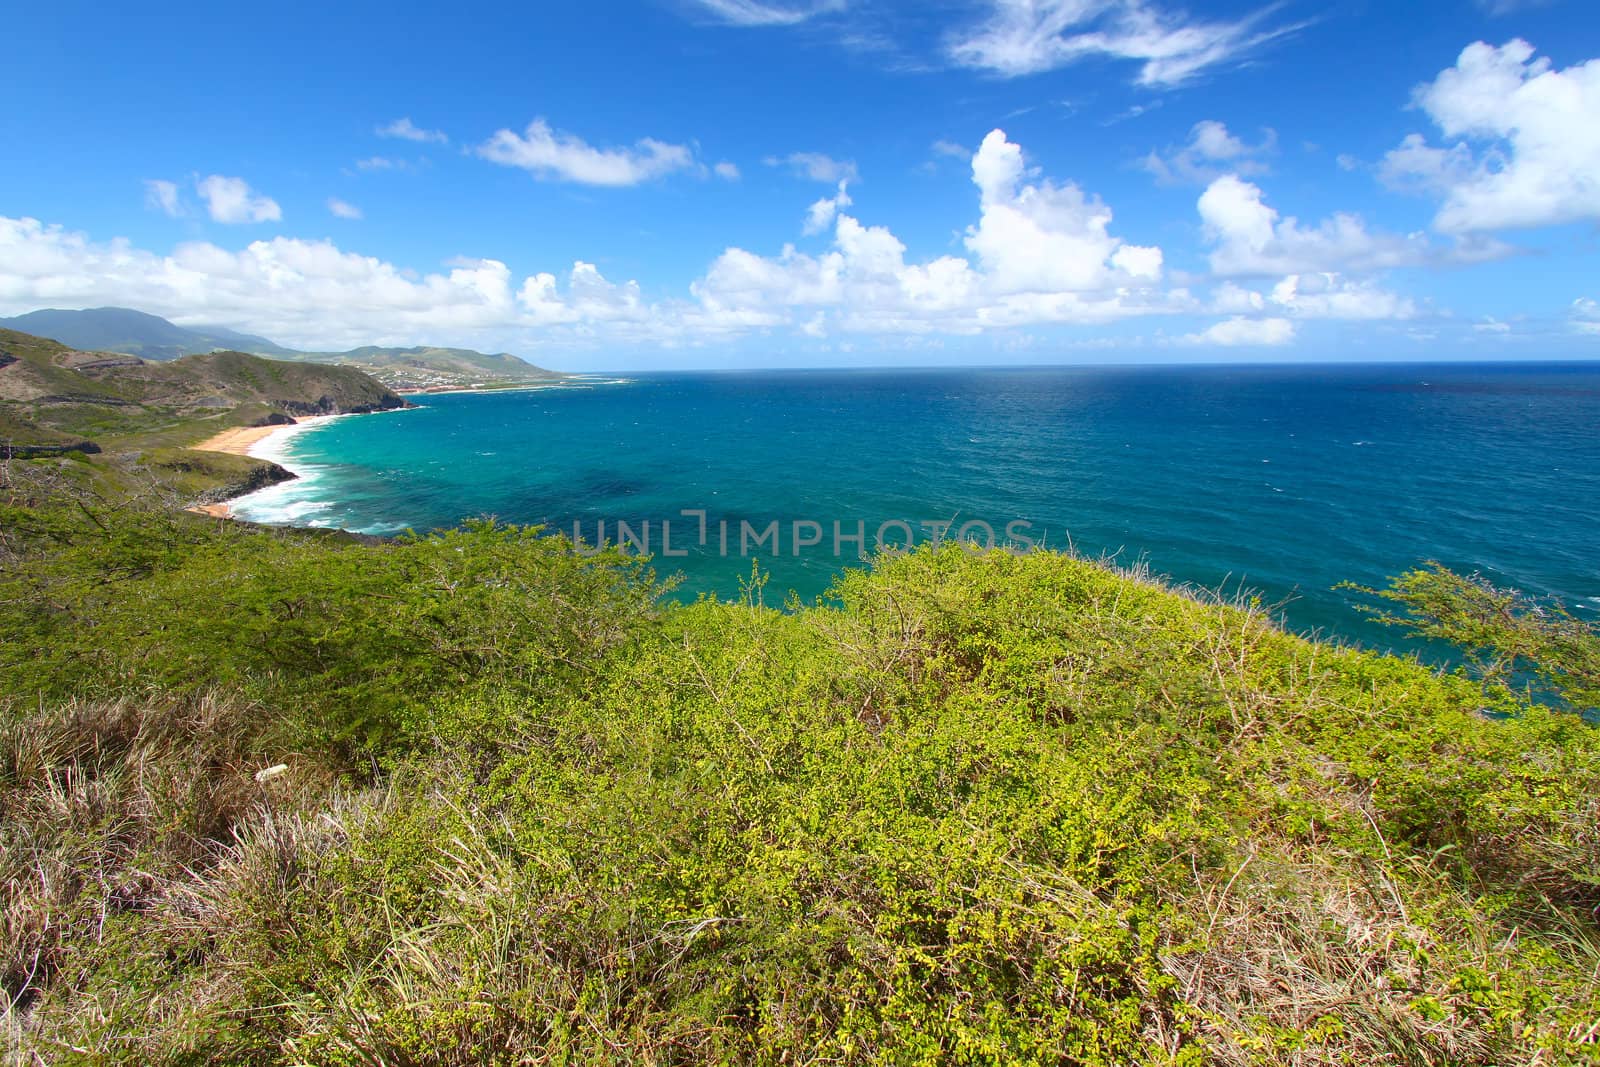 The fabulous coastline on the Caribbean island of Saint Kitts.